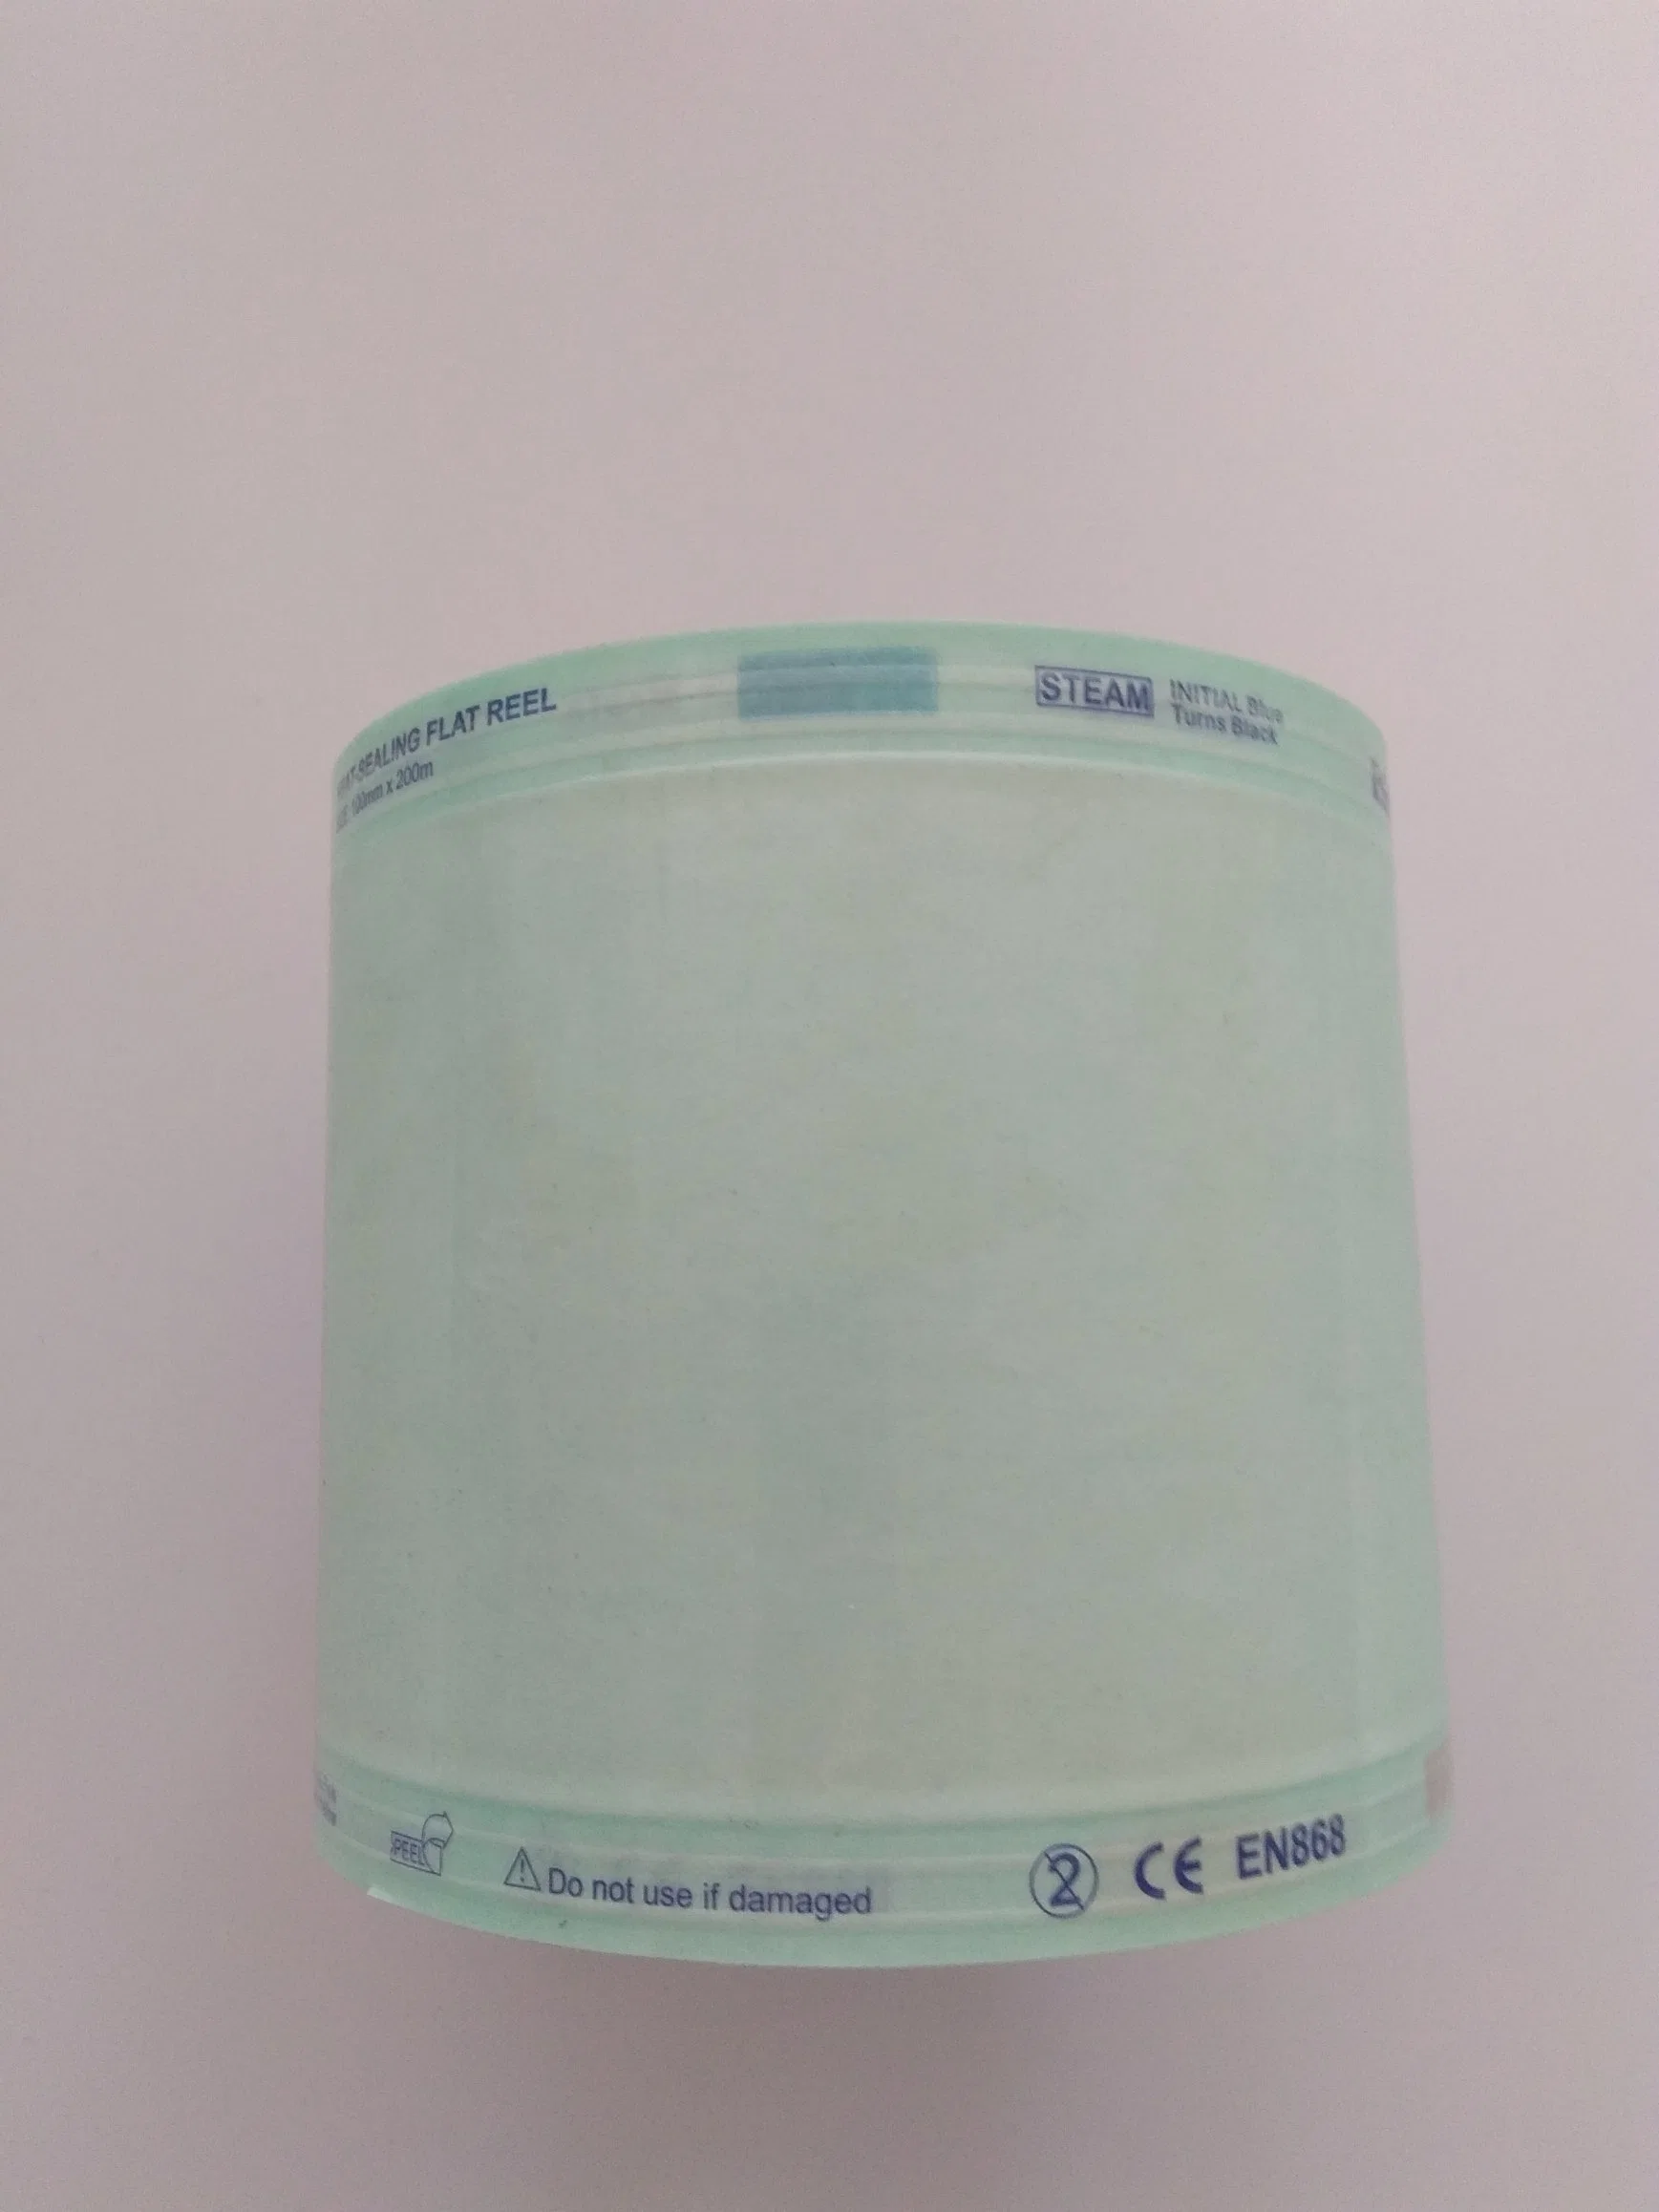 The Portable Pack Heat-Seal Sterilization Reels Flat-Paper/Film